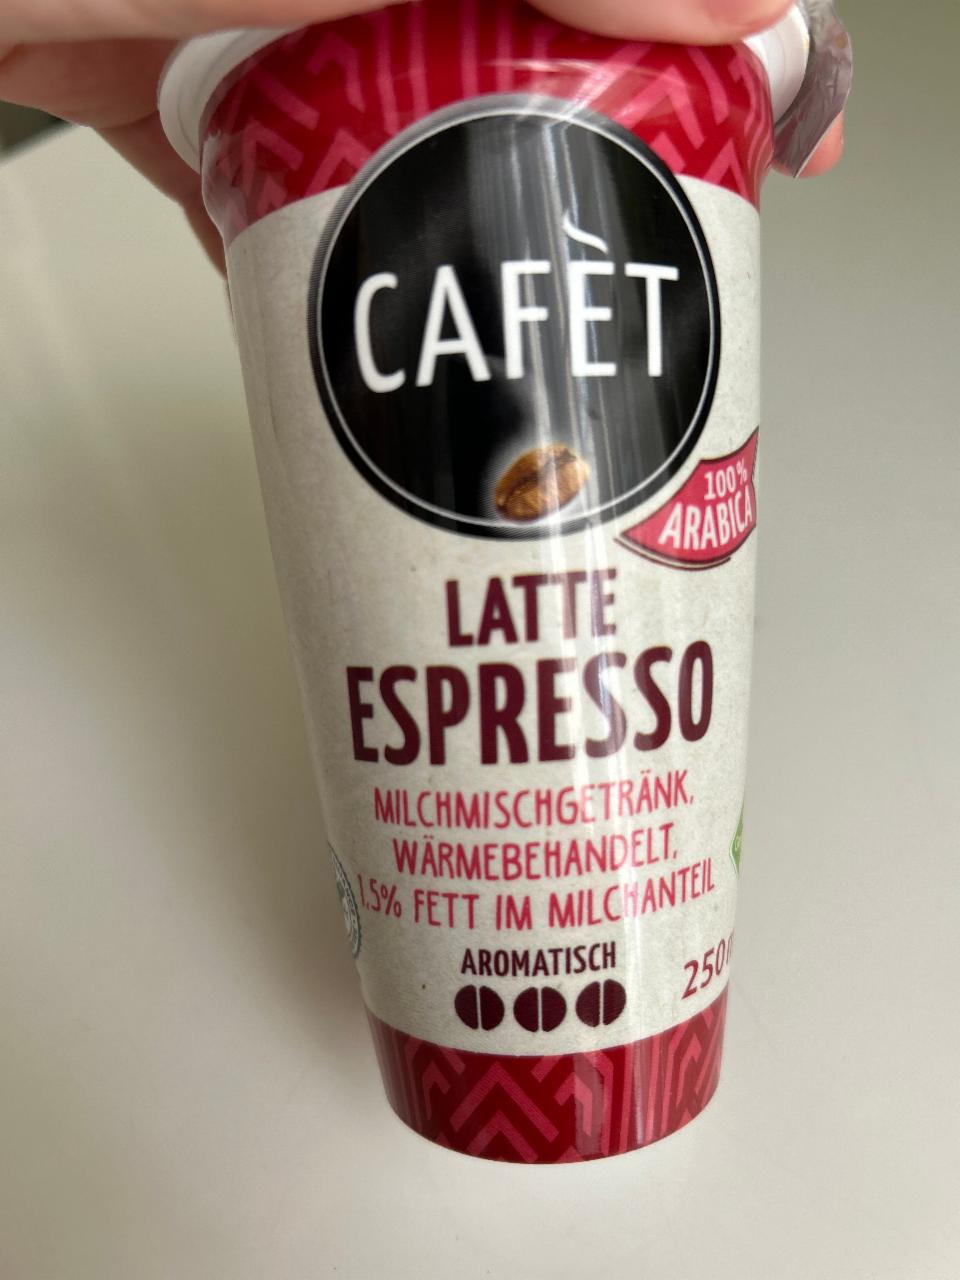 Фото - Latte Espresso Cafet